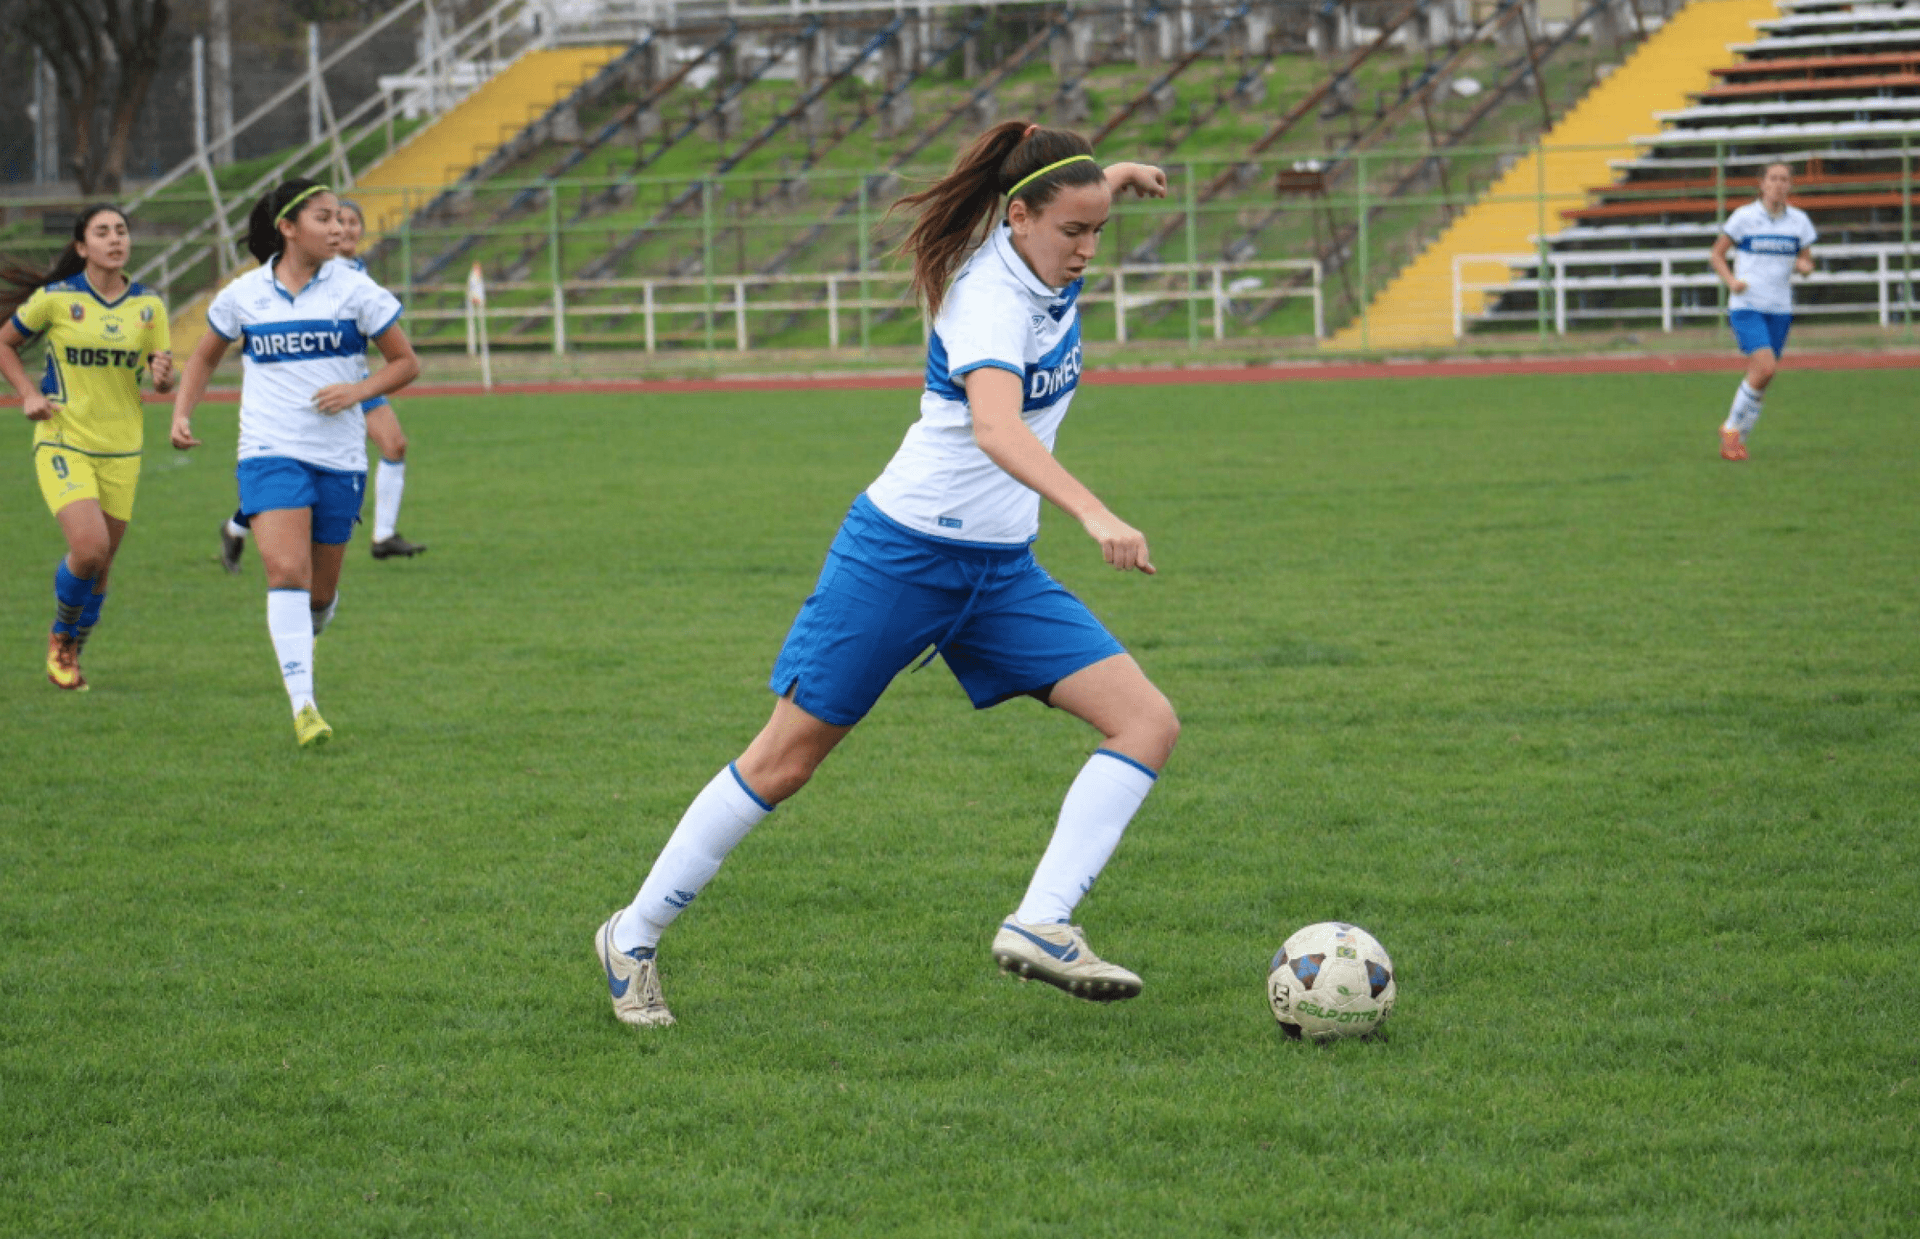 A woman wears a blue and white uniform and kicks a soccer ball.